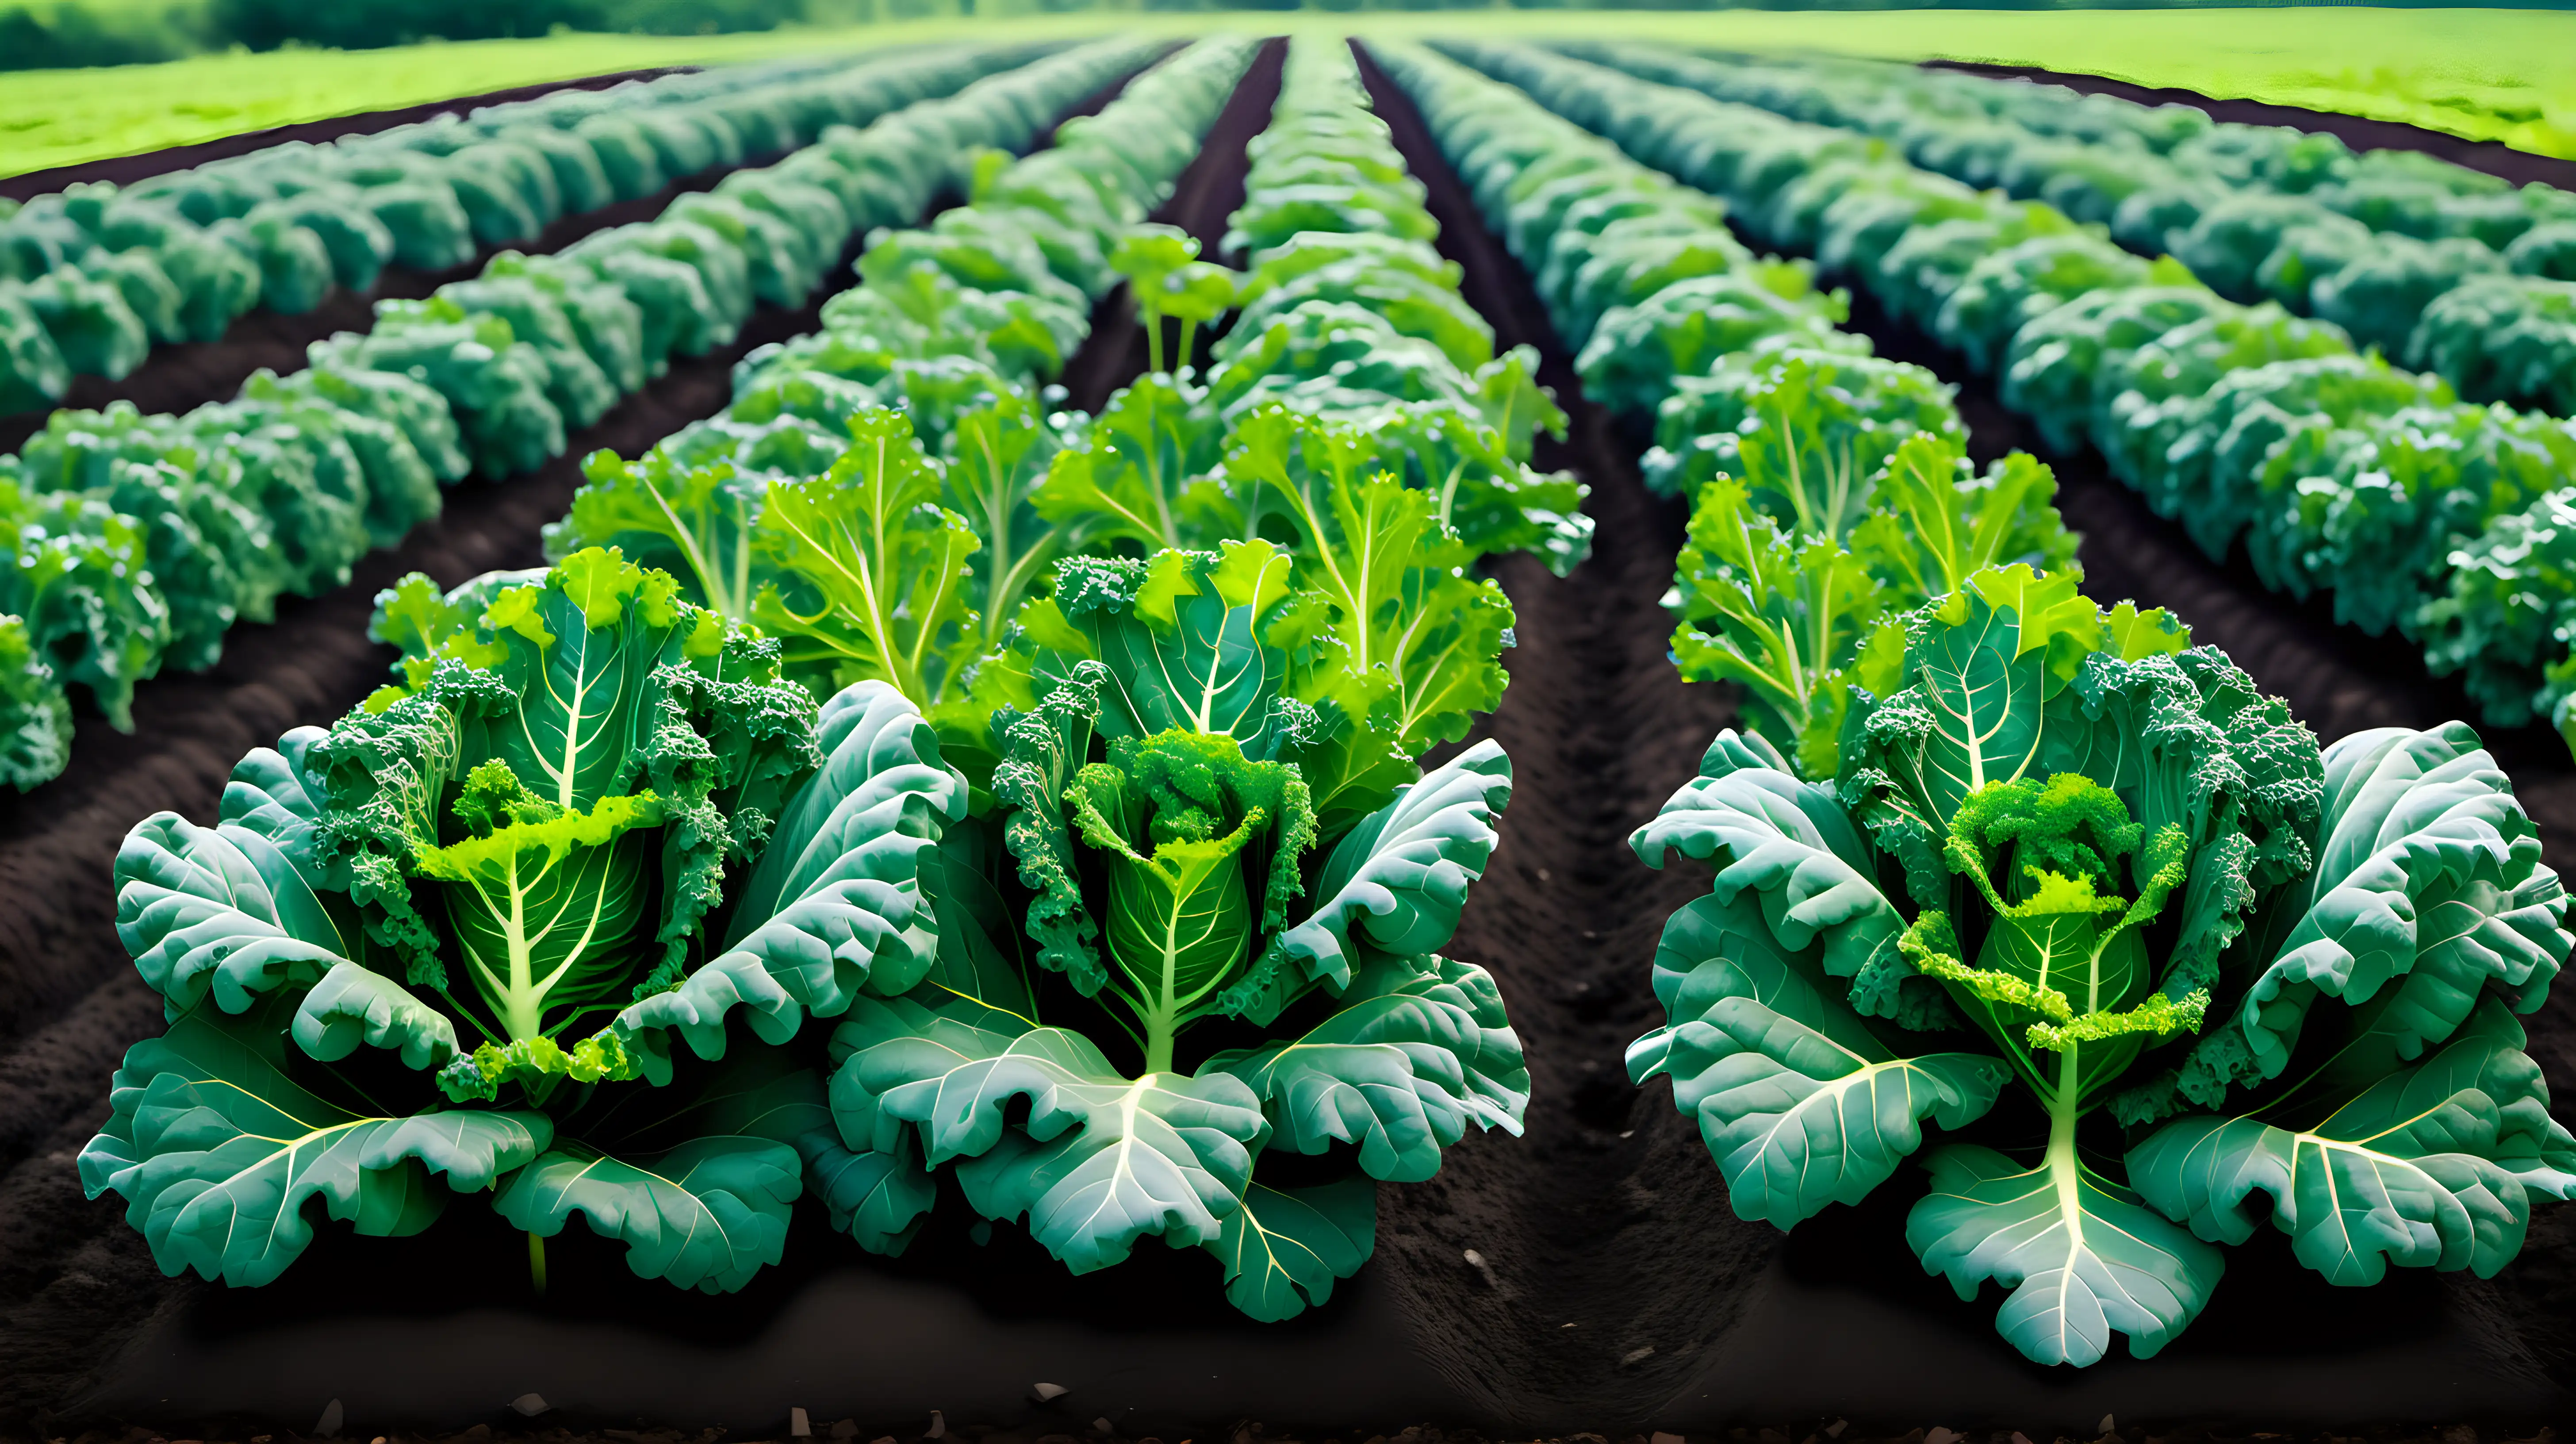 Lush Kale Vegetable Field Vibrant Green Farming Scene